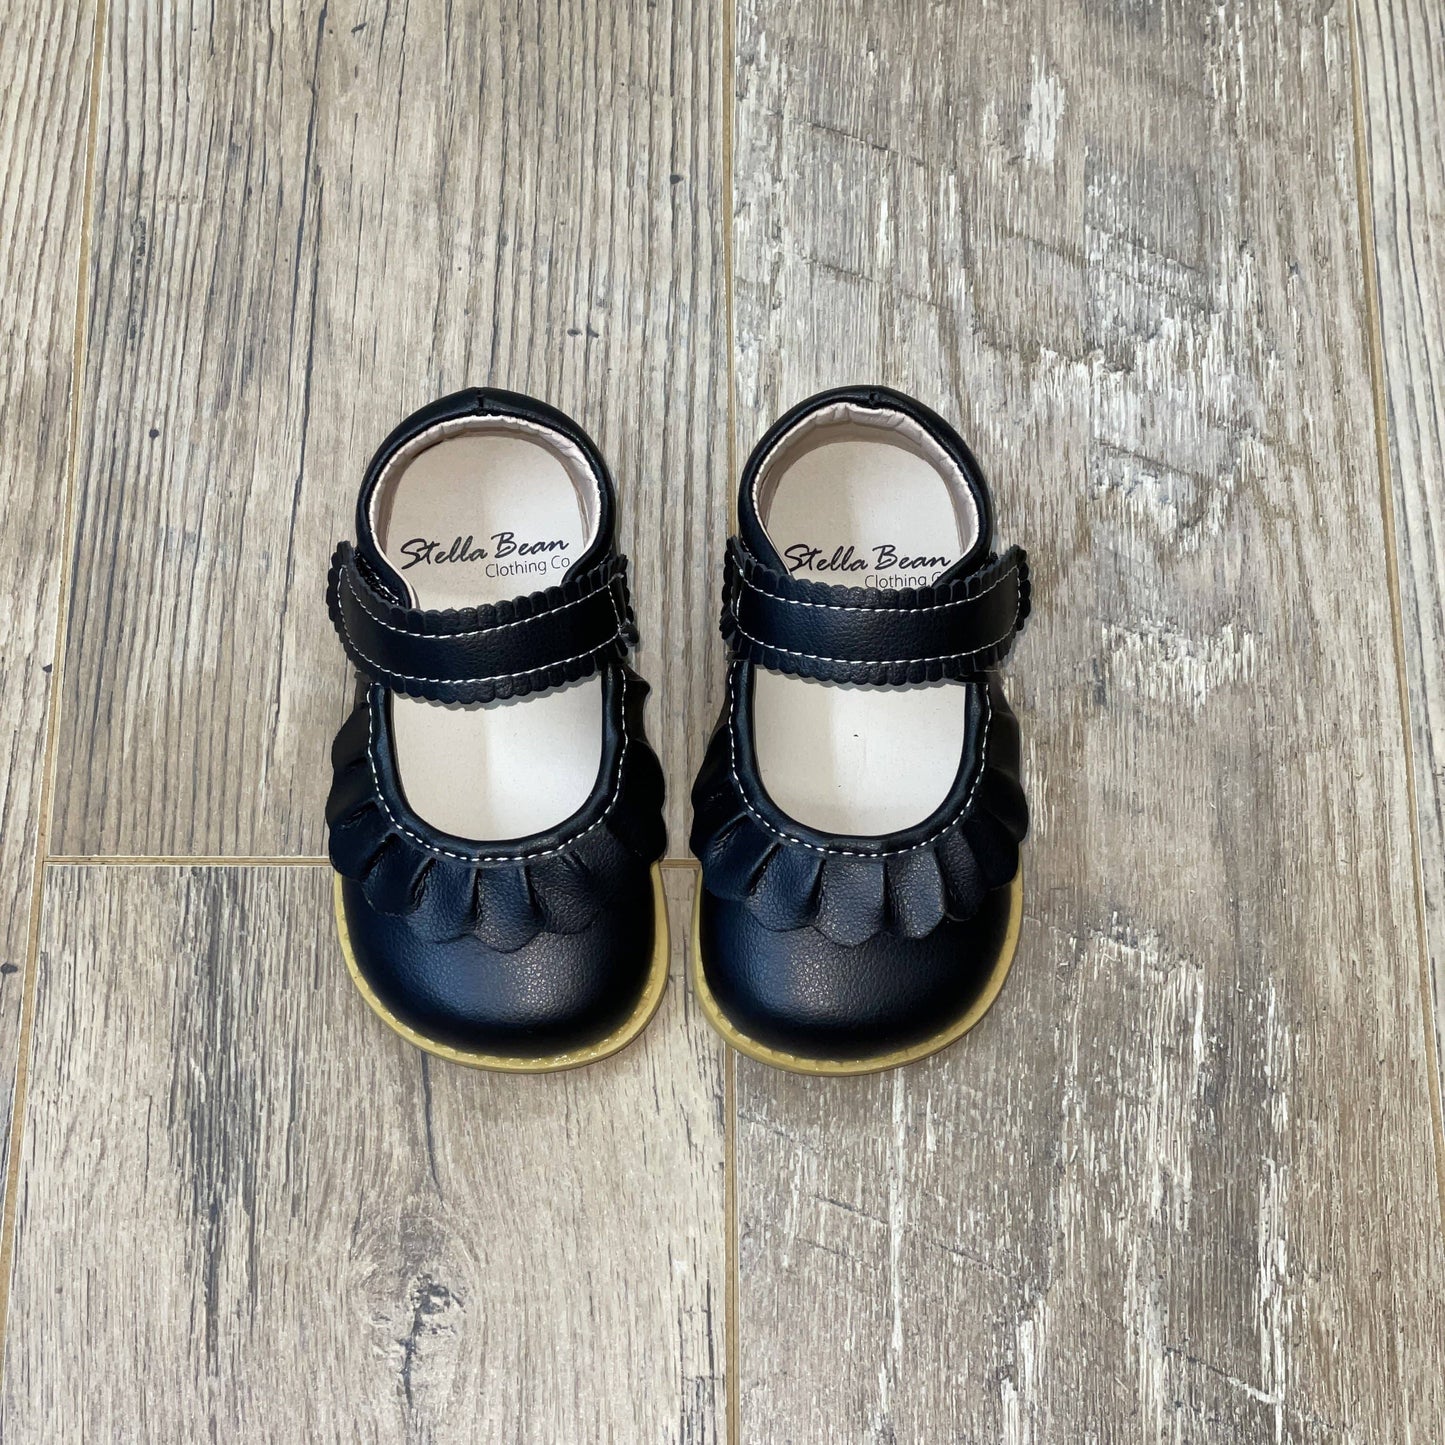 Stella Bean Clothing Co - Ruche Mary Jane Shoes - Black